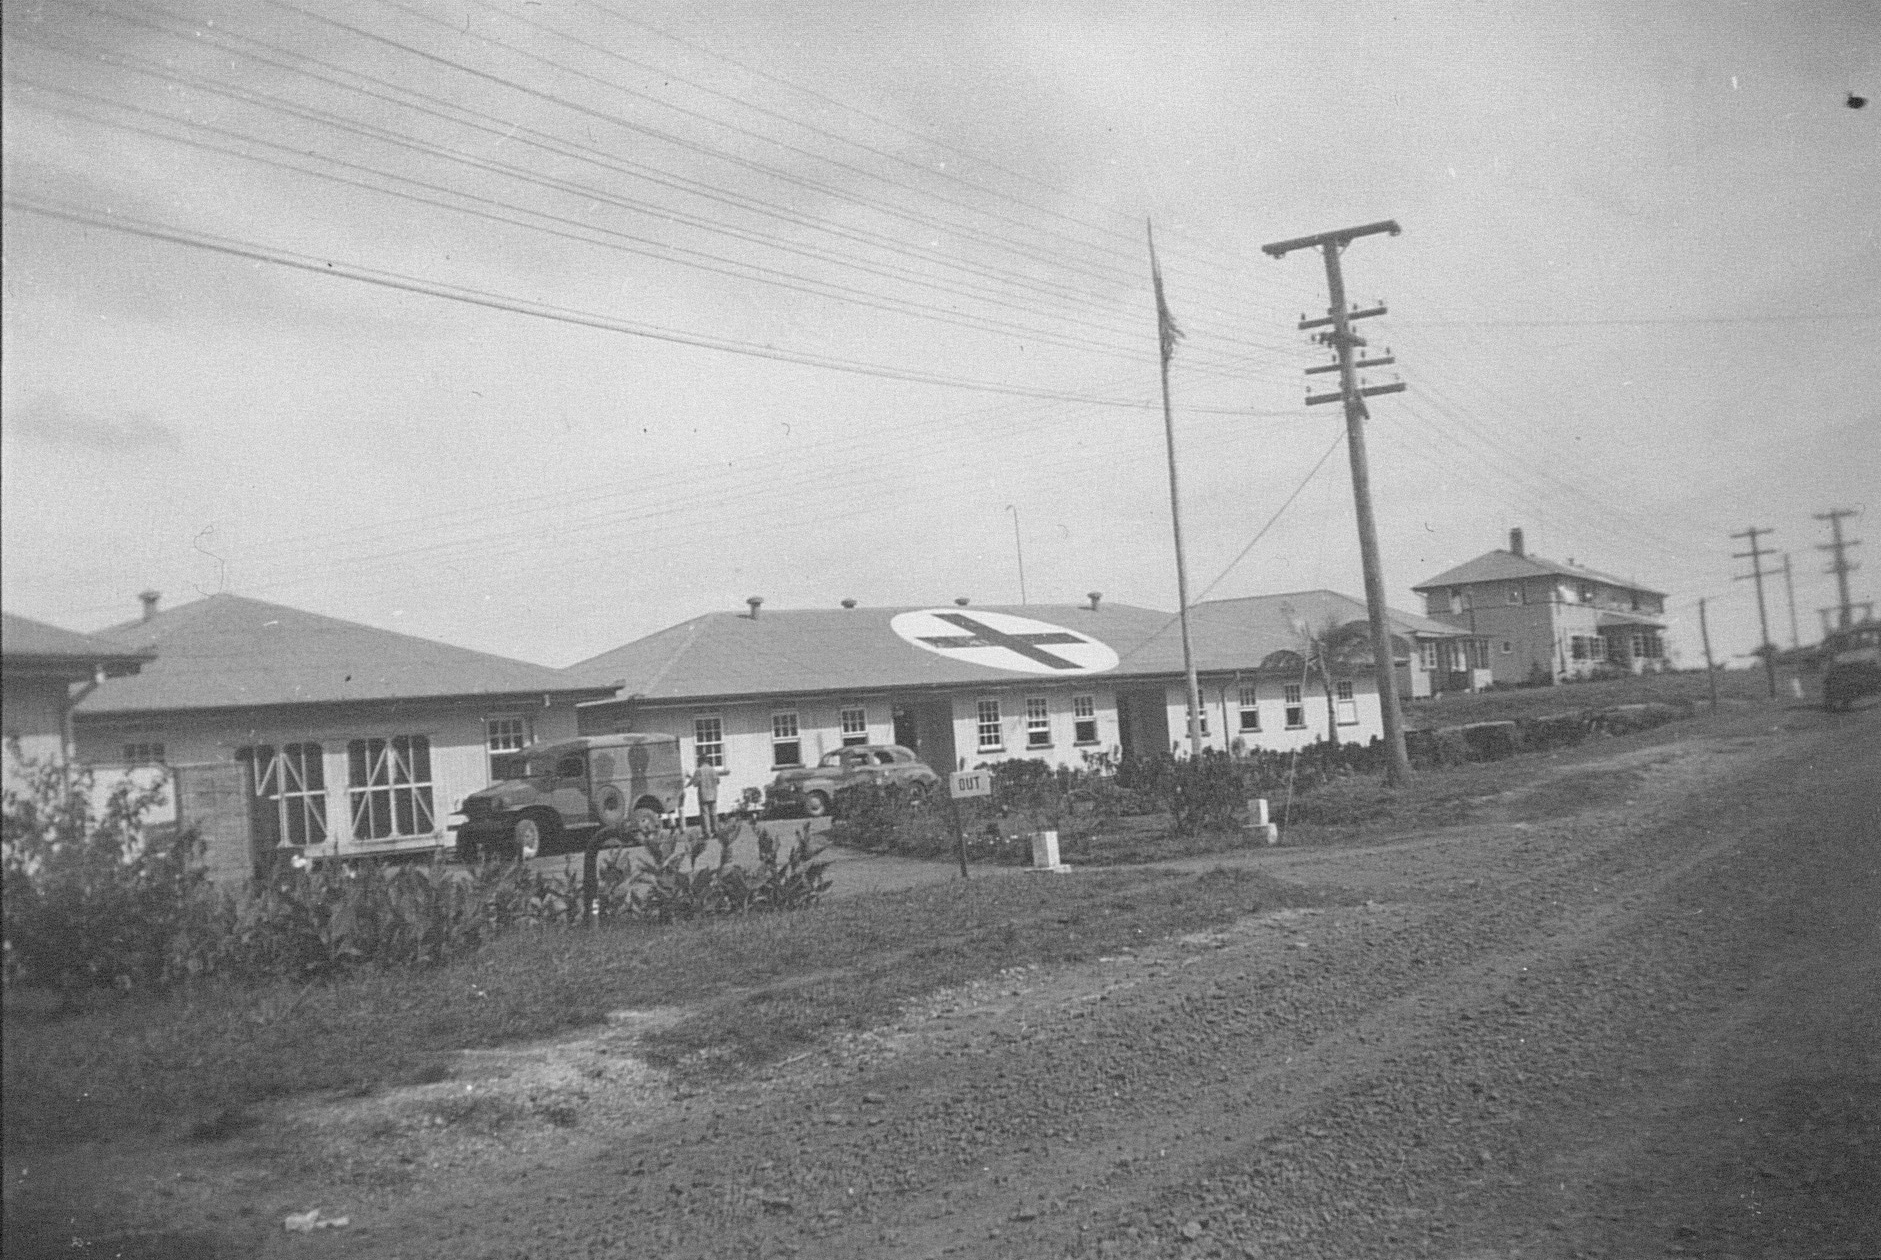 WC54 ambulance at US Army Medical Detachment 1340 facility, Fiji, 1942-1944